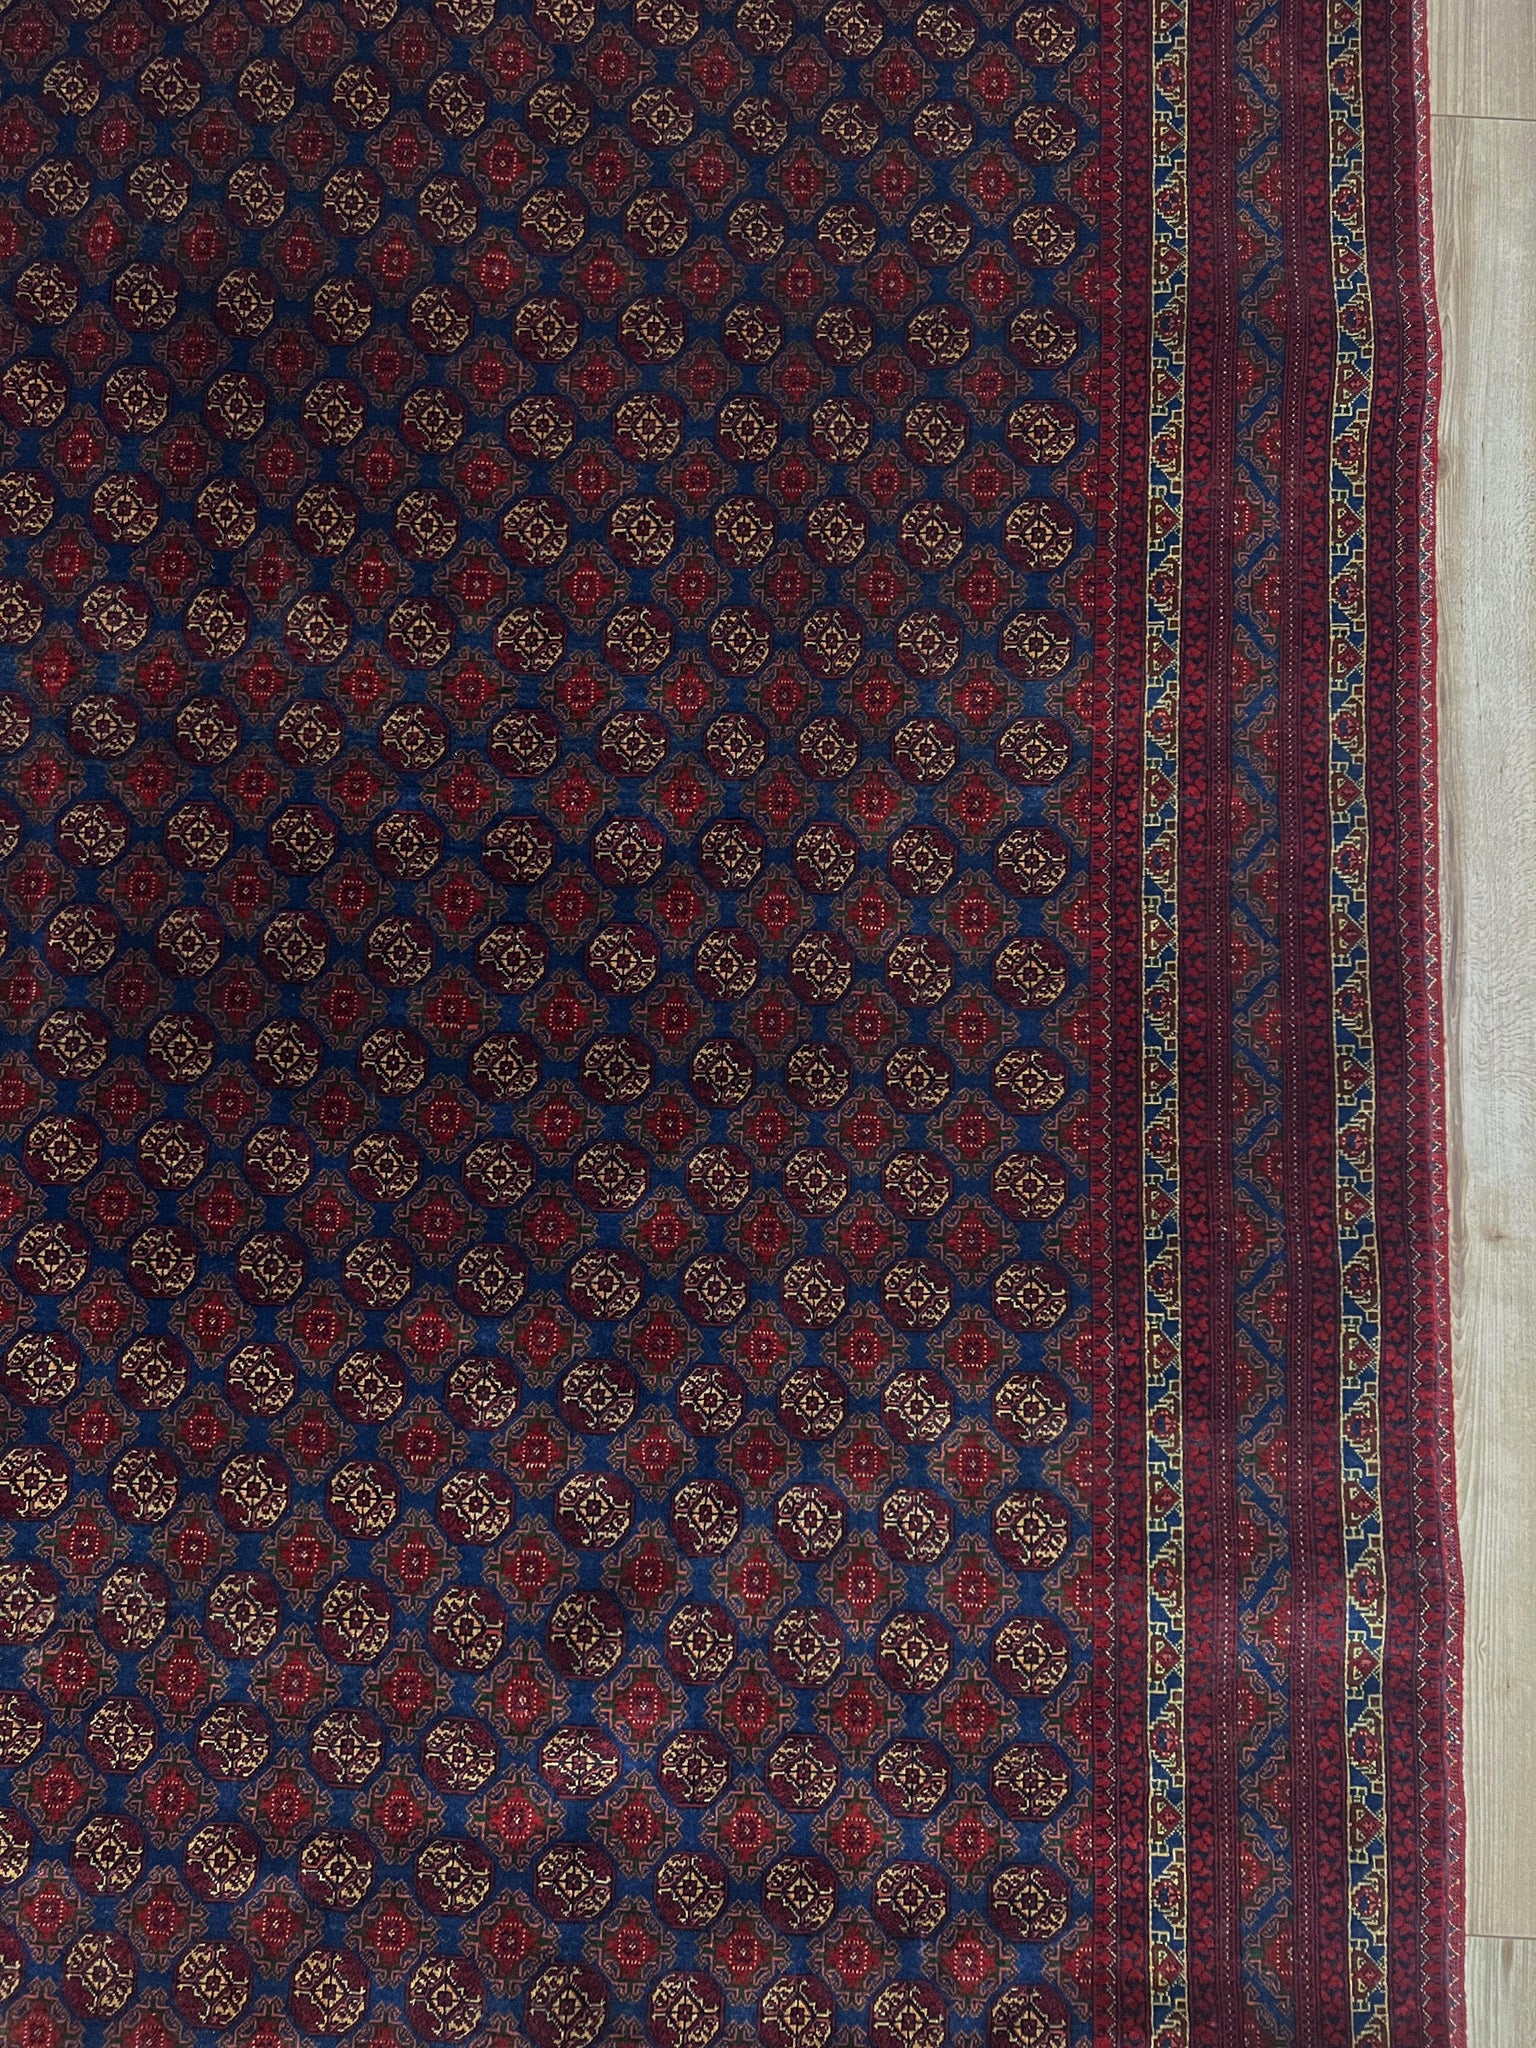 Soft Turkmen rug for living room, bedroom, dining. Oriental rug store san mateo, palo alto, berkeley. Buy oriental rug shop.